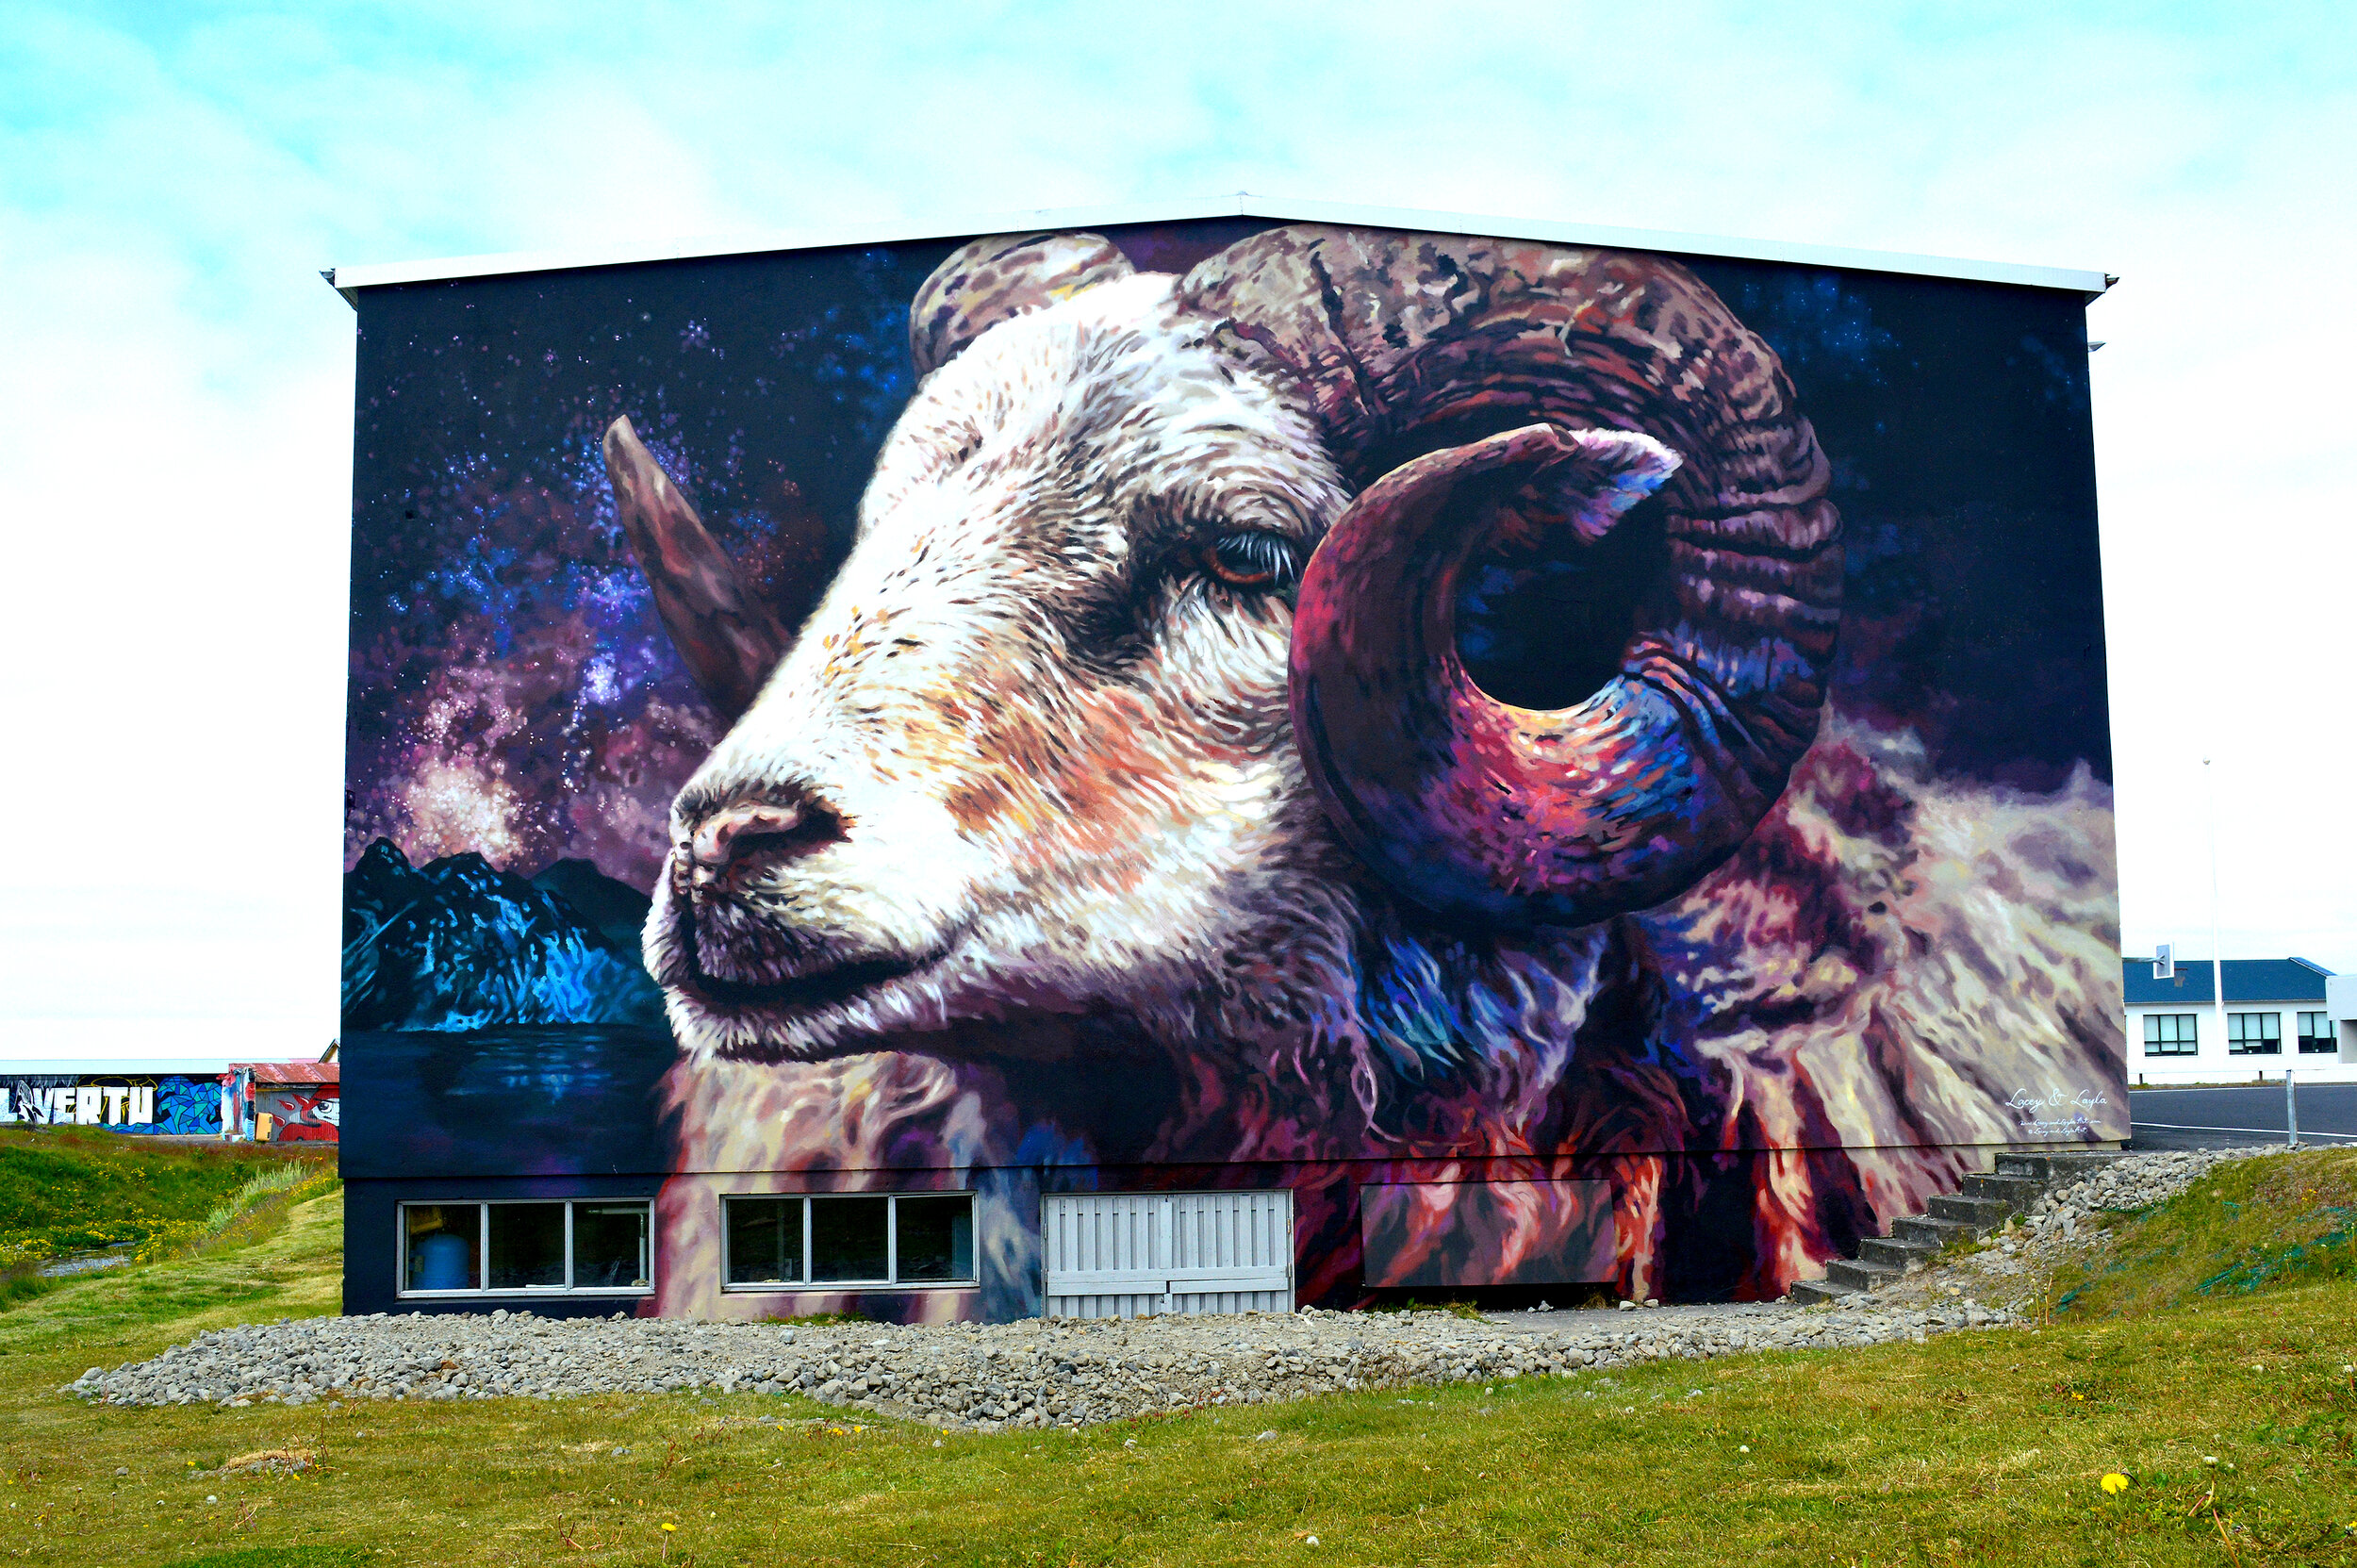  Sauður (Sheep)  1,100 square feet, Hellissandur, Iceland 